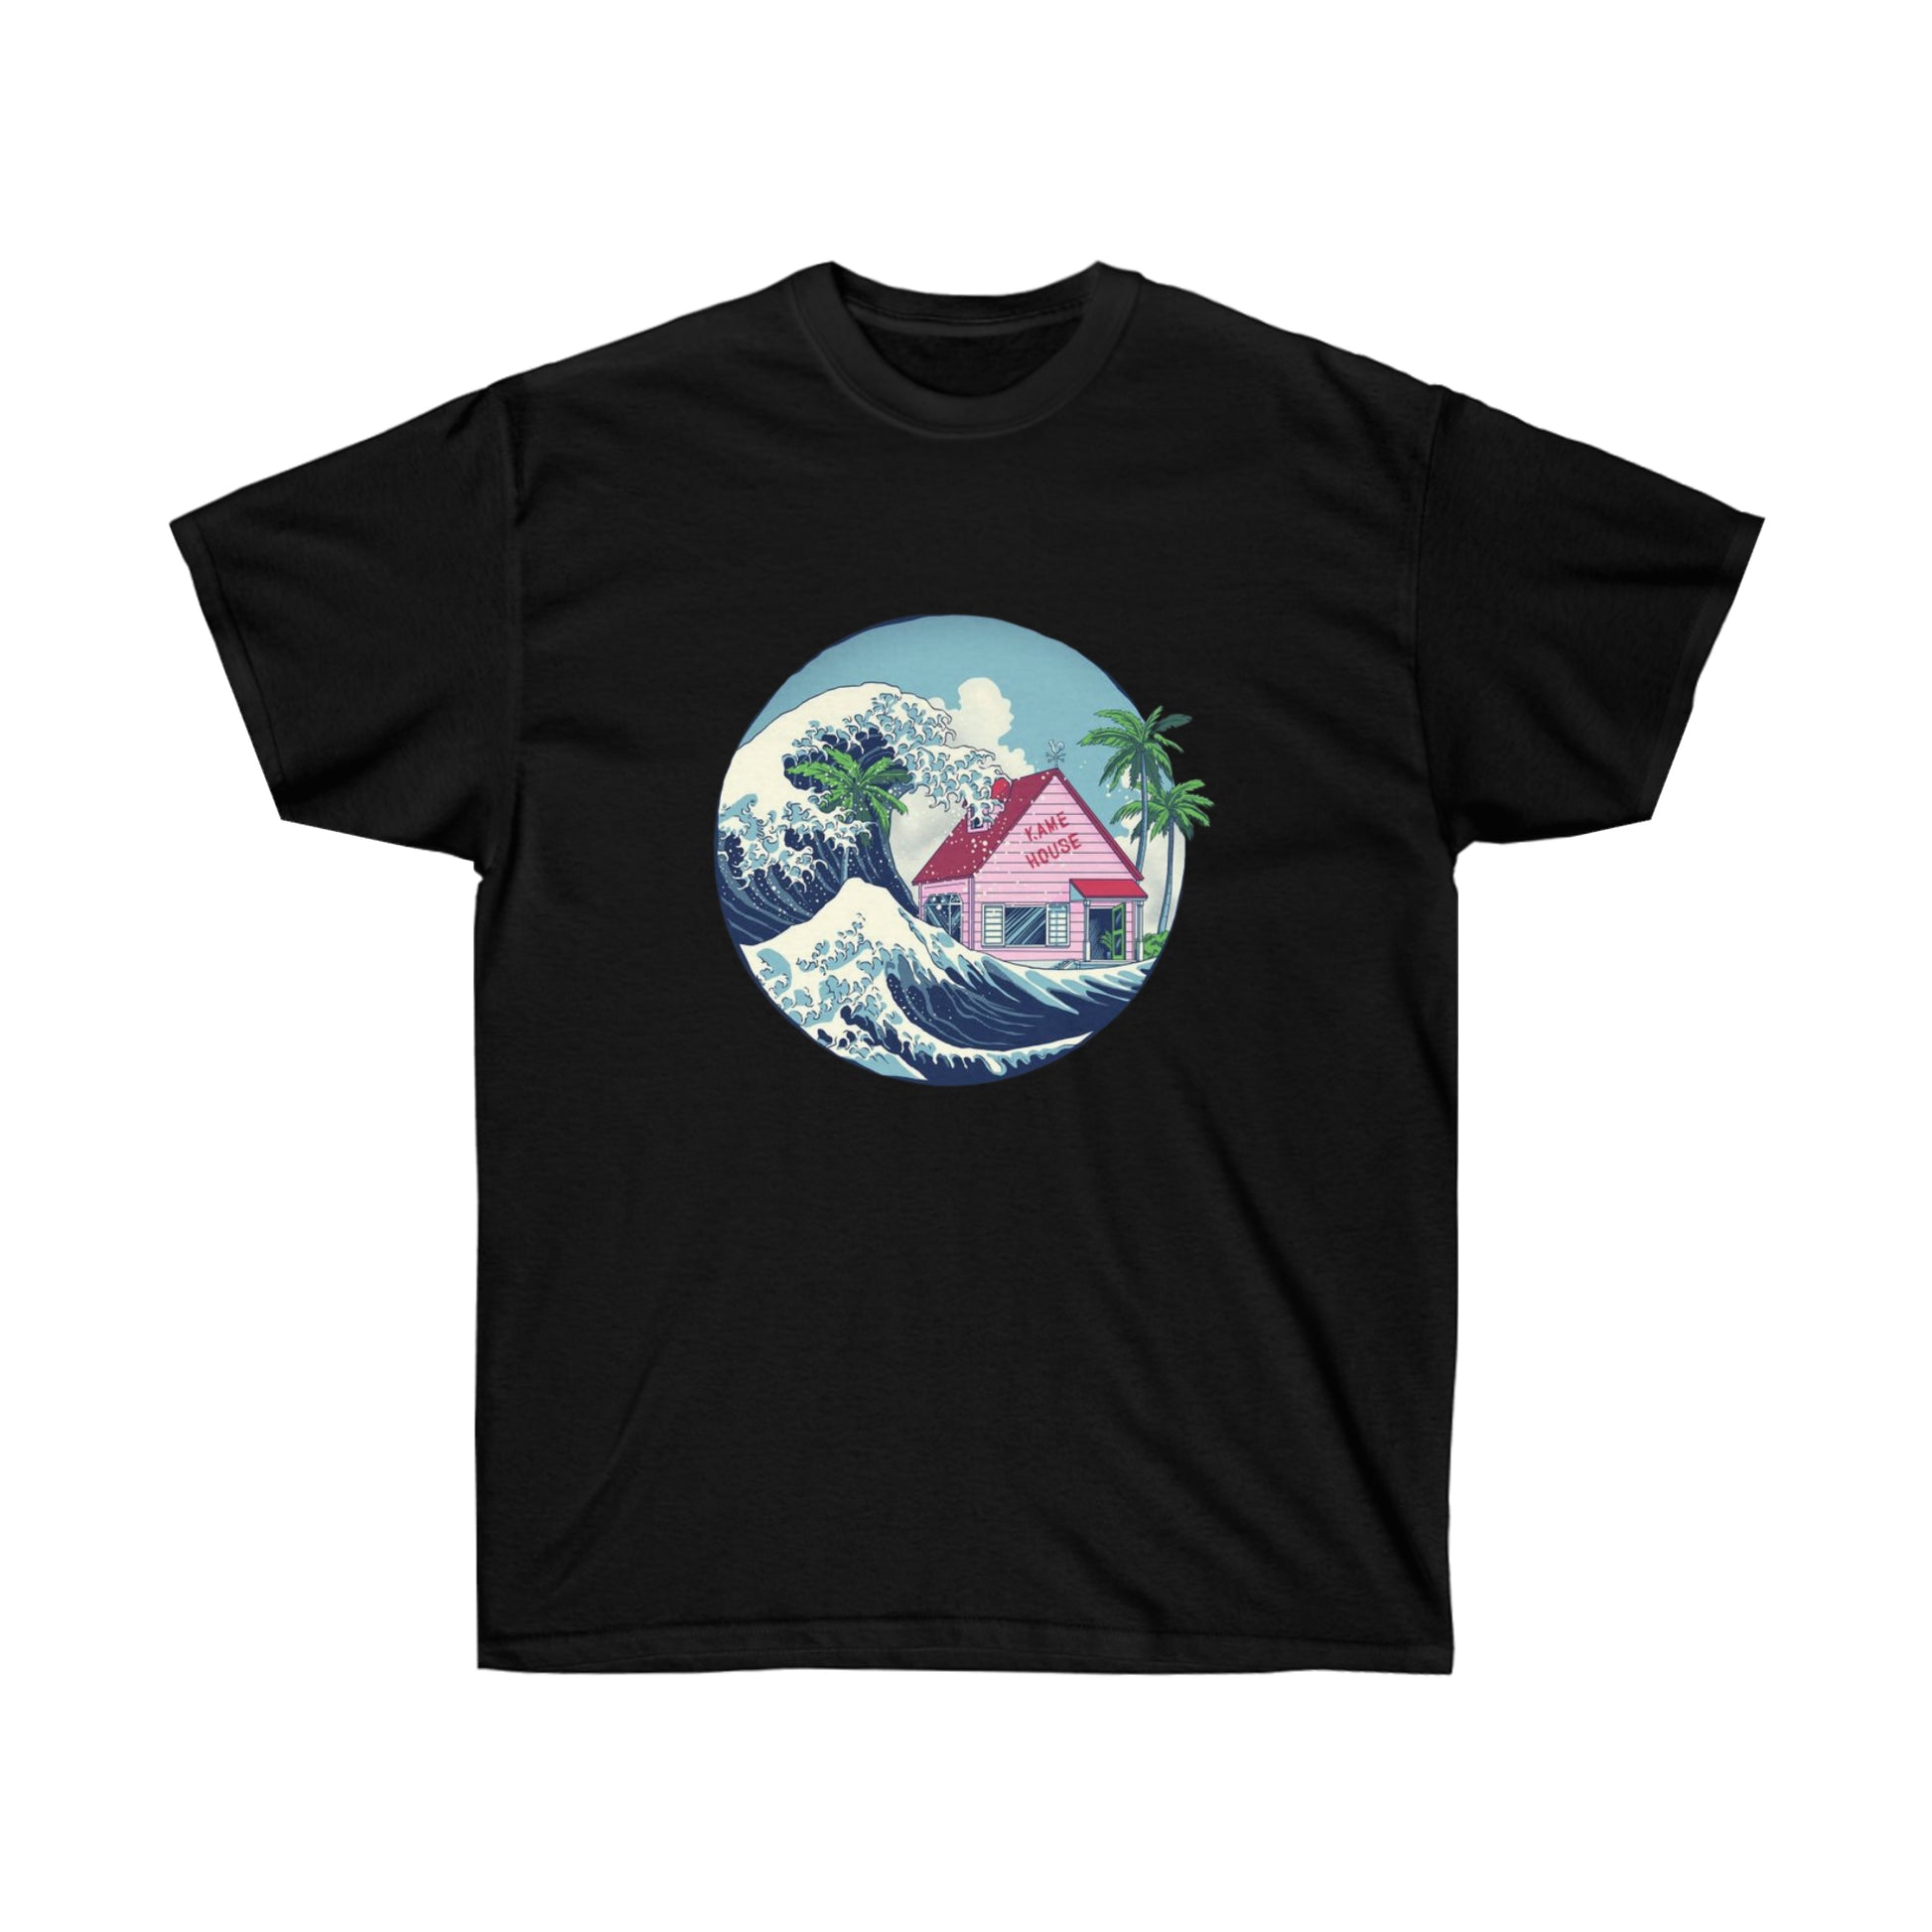 t-shirt dragon ball noir kame house